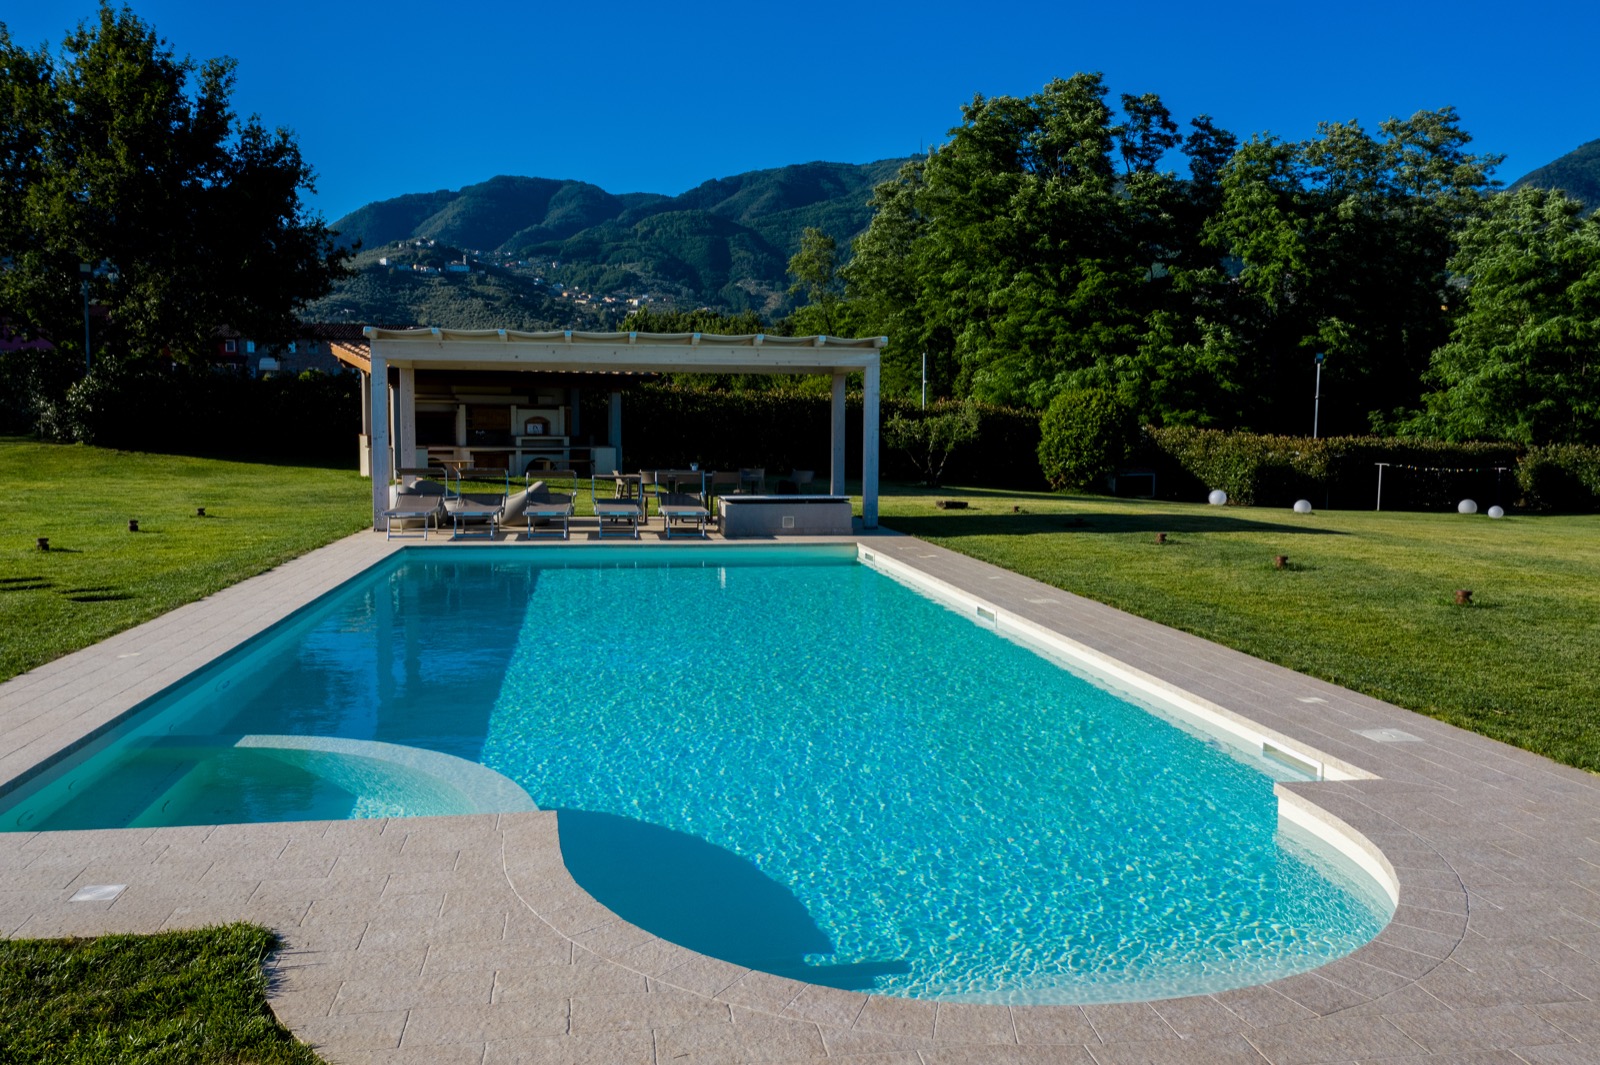 Affitto villa in zona tranquilla Lucca Toscana